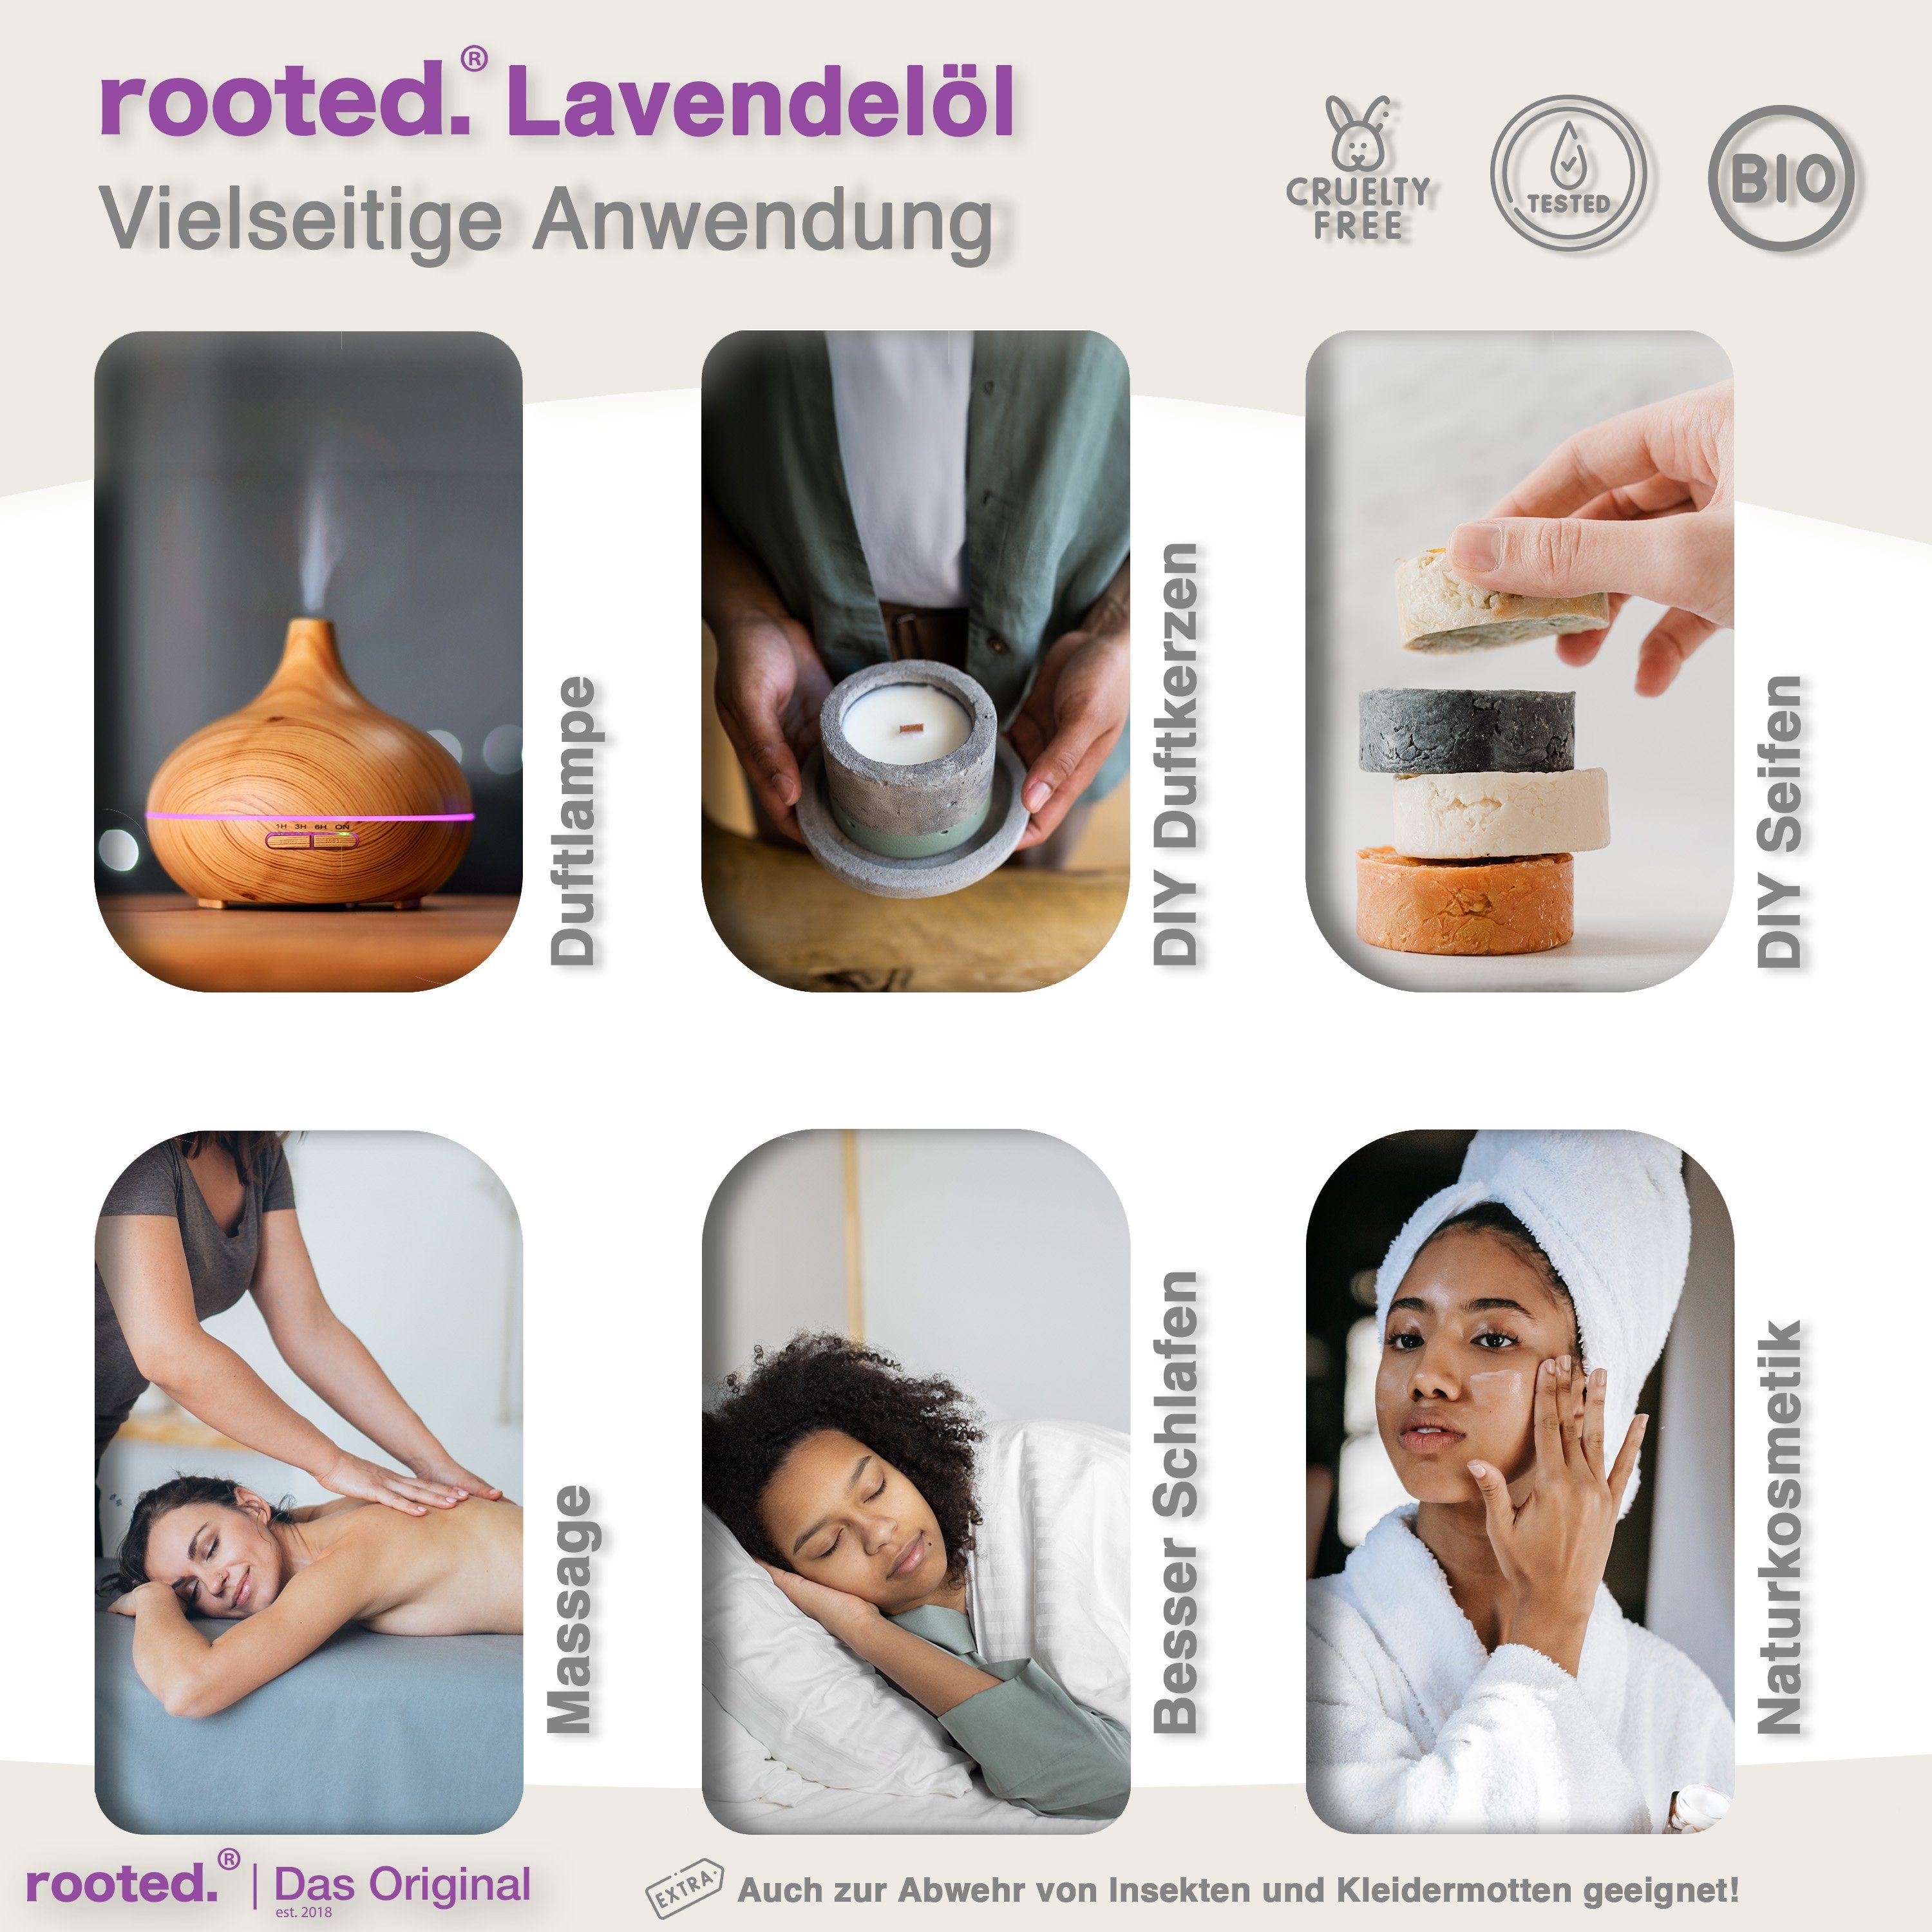 Lavendelöl, rooted. angustifolia Lavandula Körperöl ätherisches rooted.®, 10ml